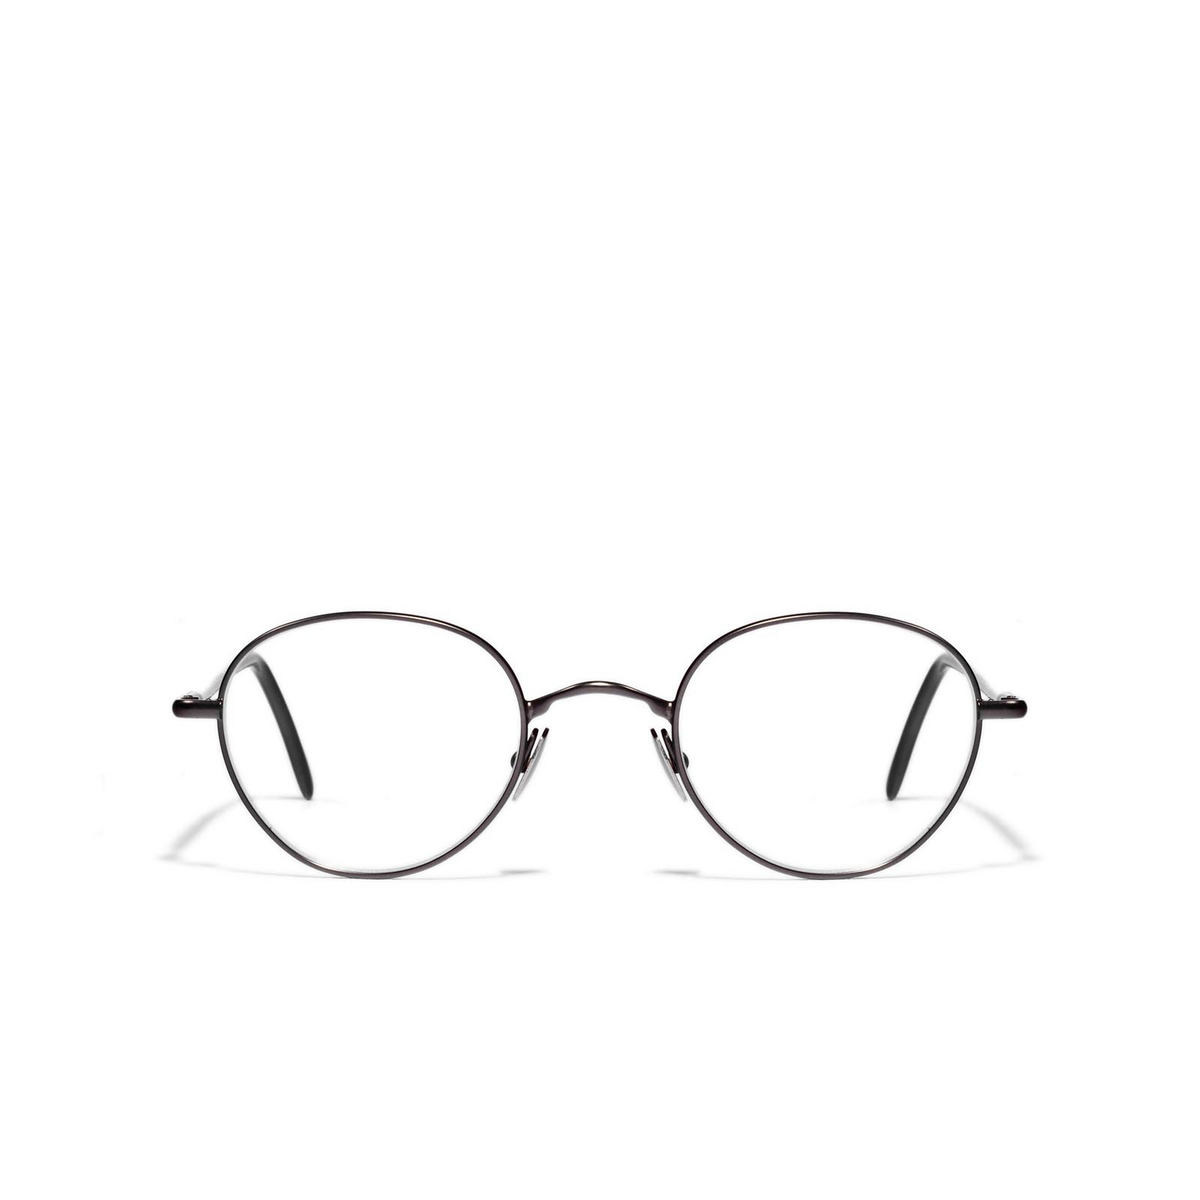 L.G.R BLIXEN Eyeglasses 04 Grey Matt - front view